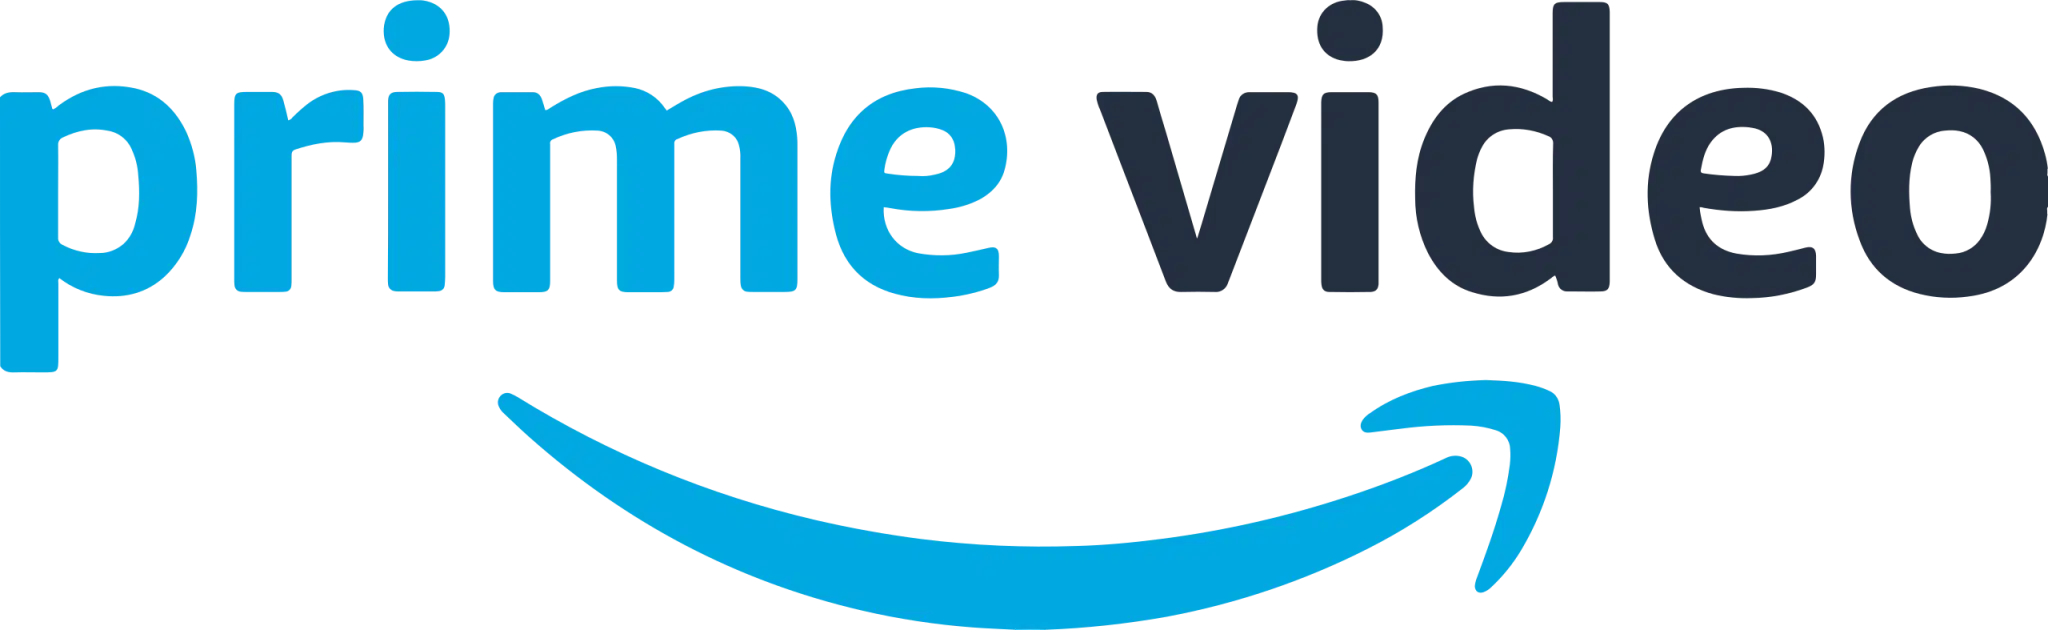 Logotipo de Amazon Prime Video